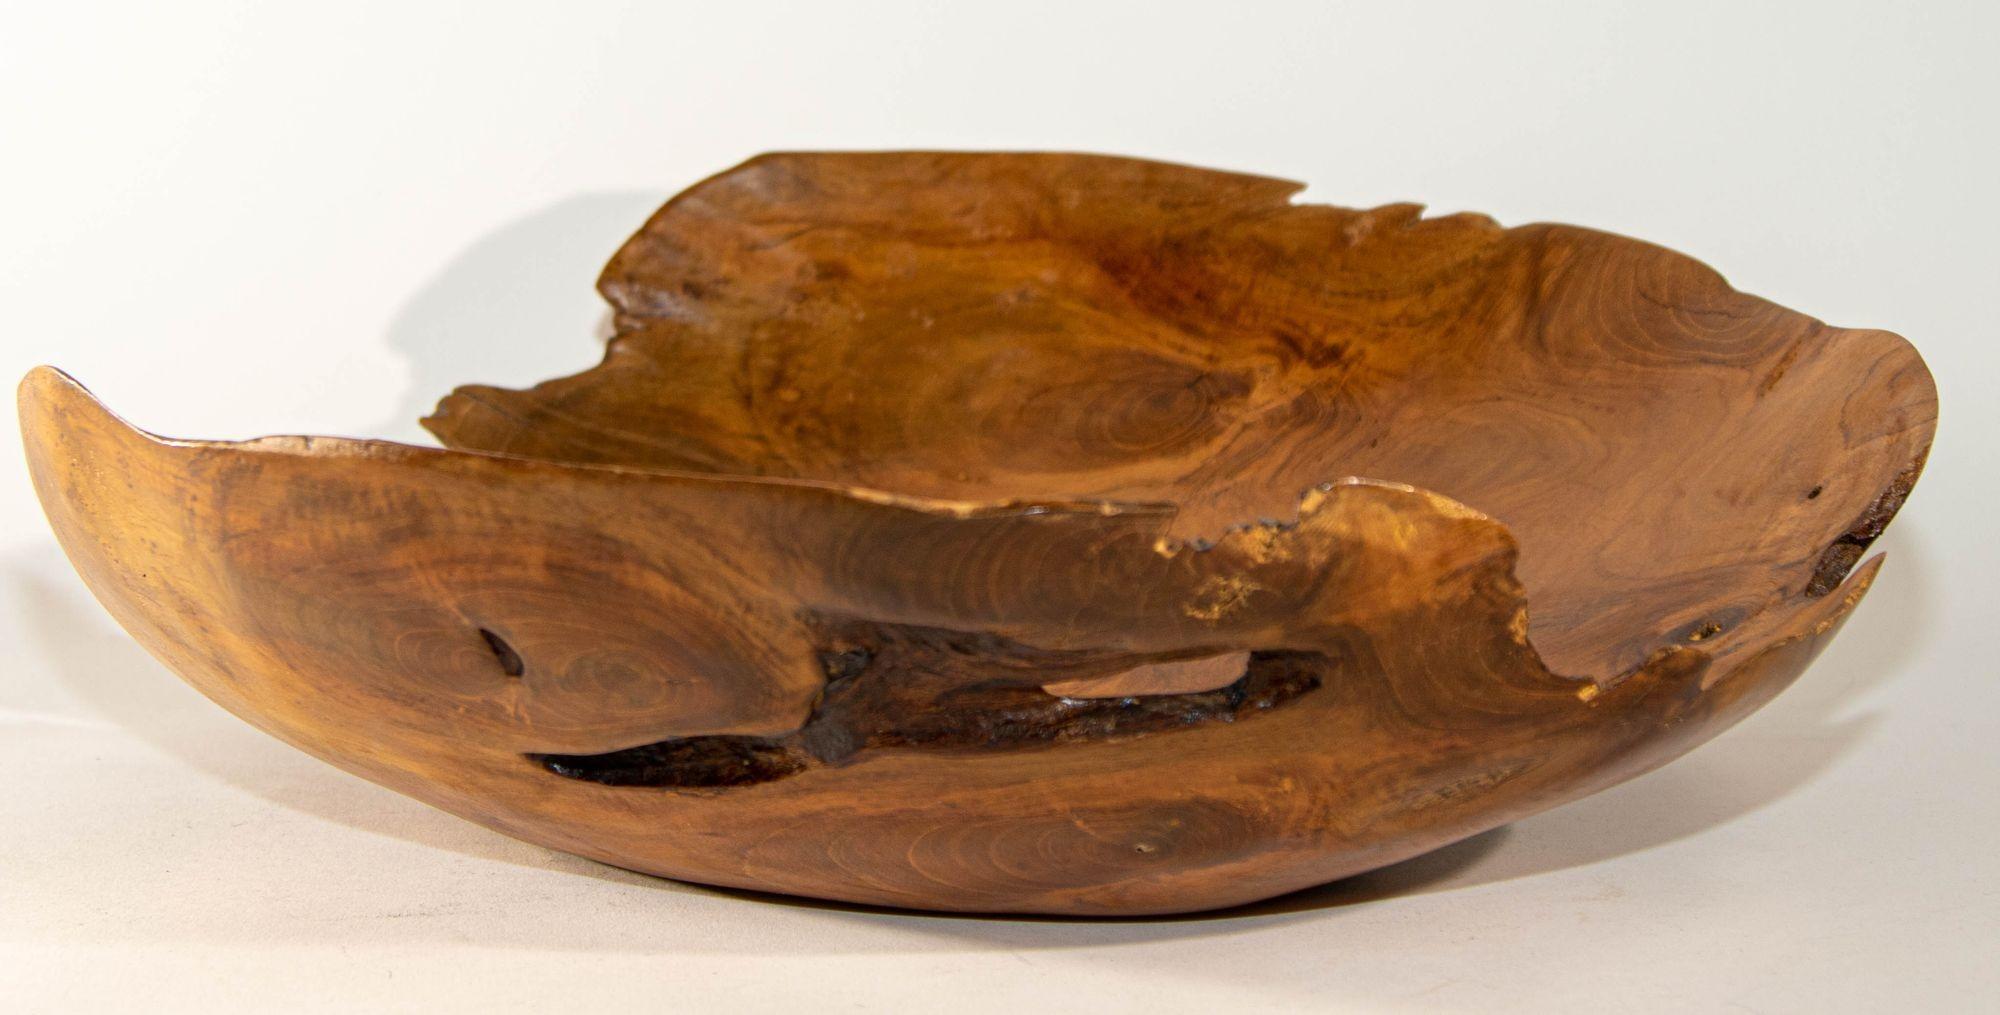 Organic Modern Organic Teak Burl Wood Bowl Natural Free Form Live Edge Sculptural Root Vessel